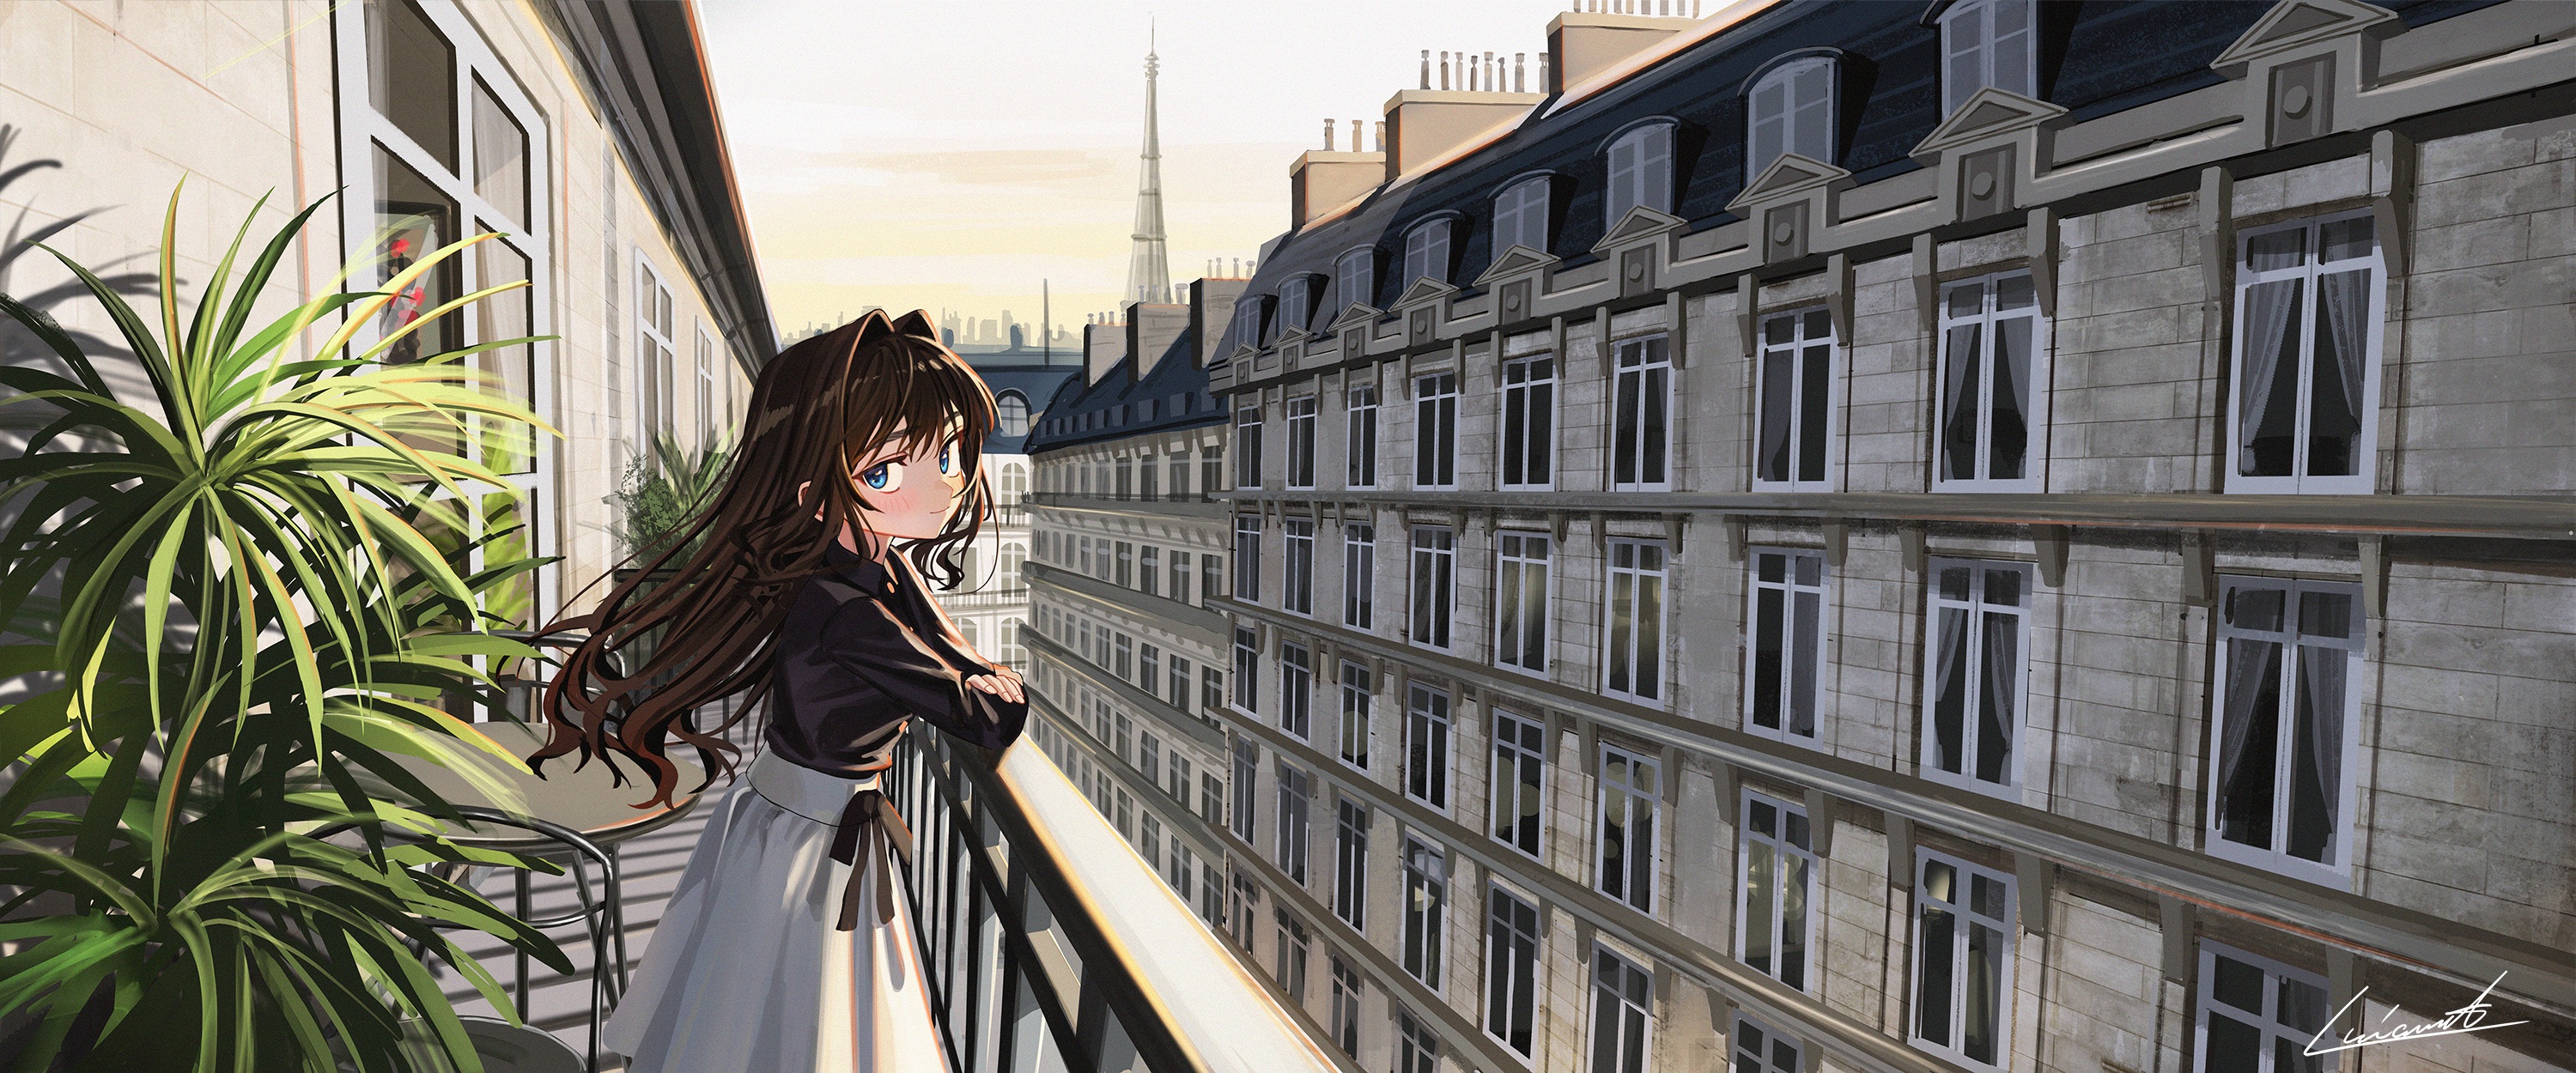 Anime Anime Girls Paris Eiffel Tower 3000x1250